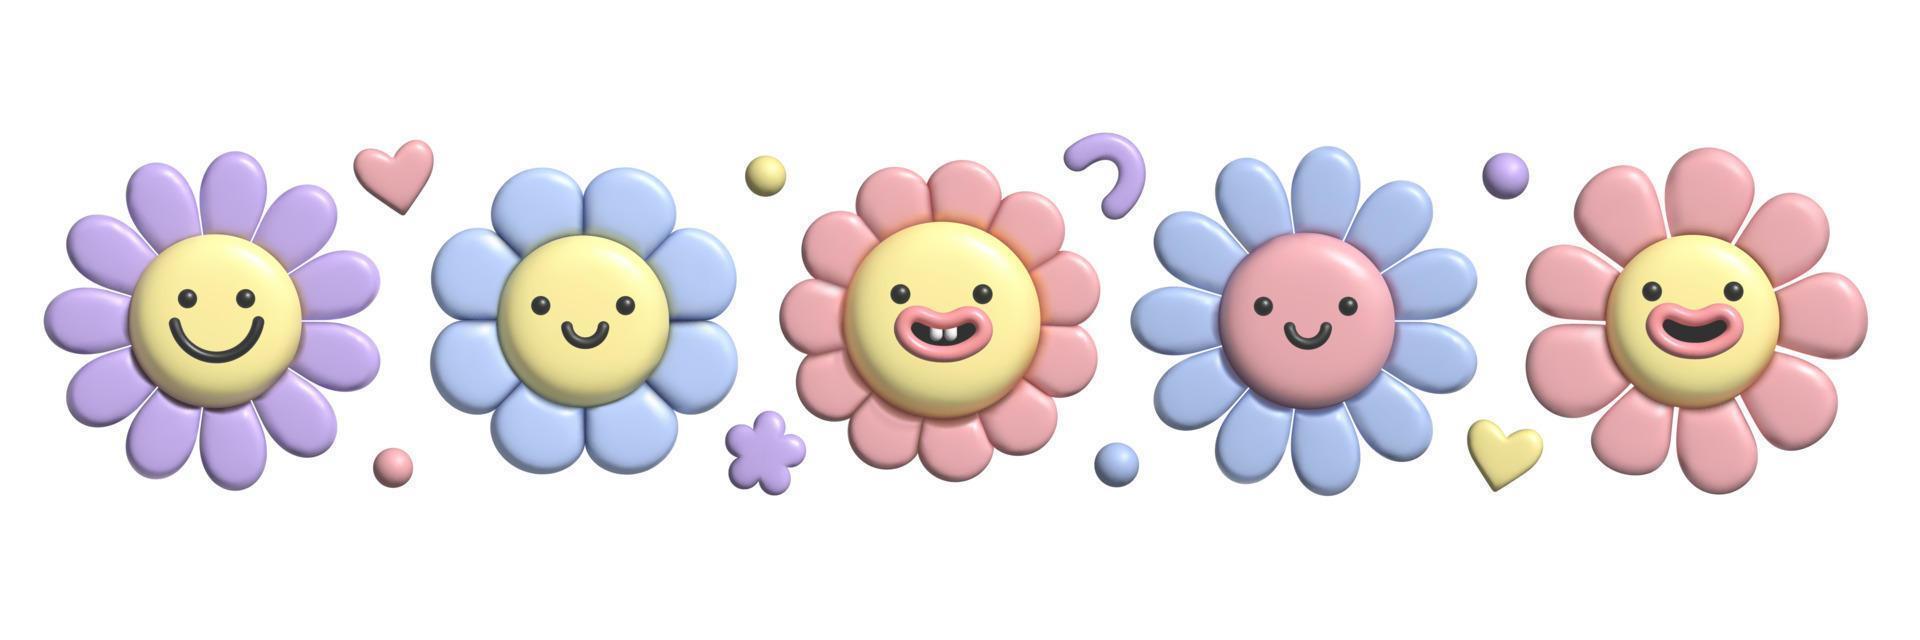 3d pastel bloem reeks met plasticine effect. y2k schattig glimlach madeliefje stickers in modieus plastic stijl. vector